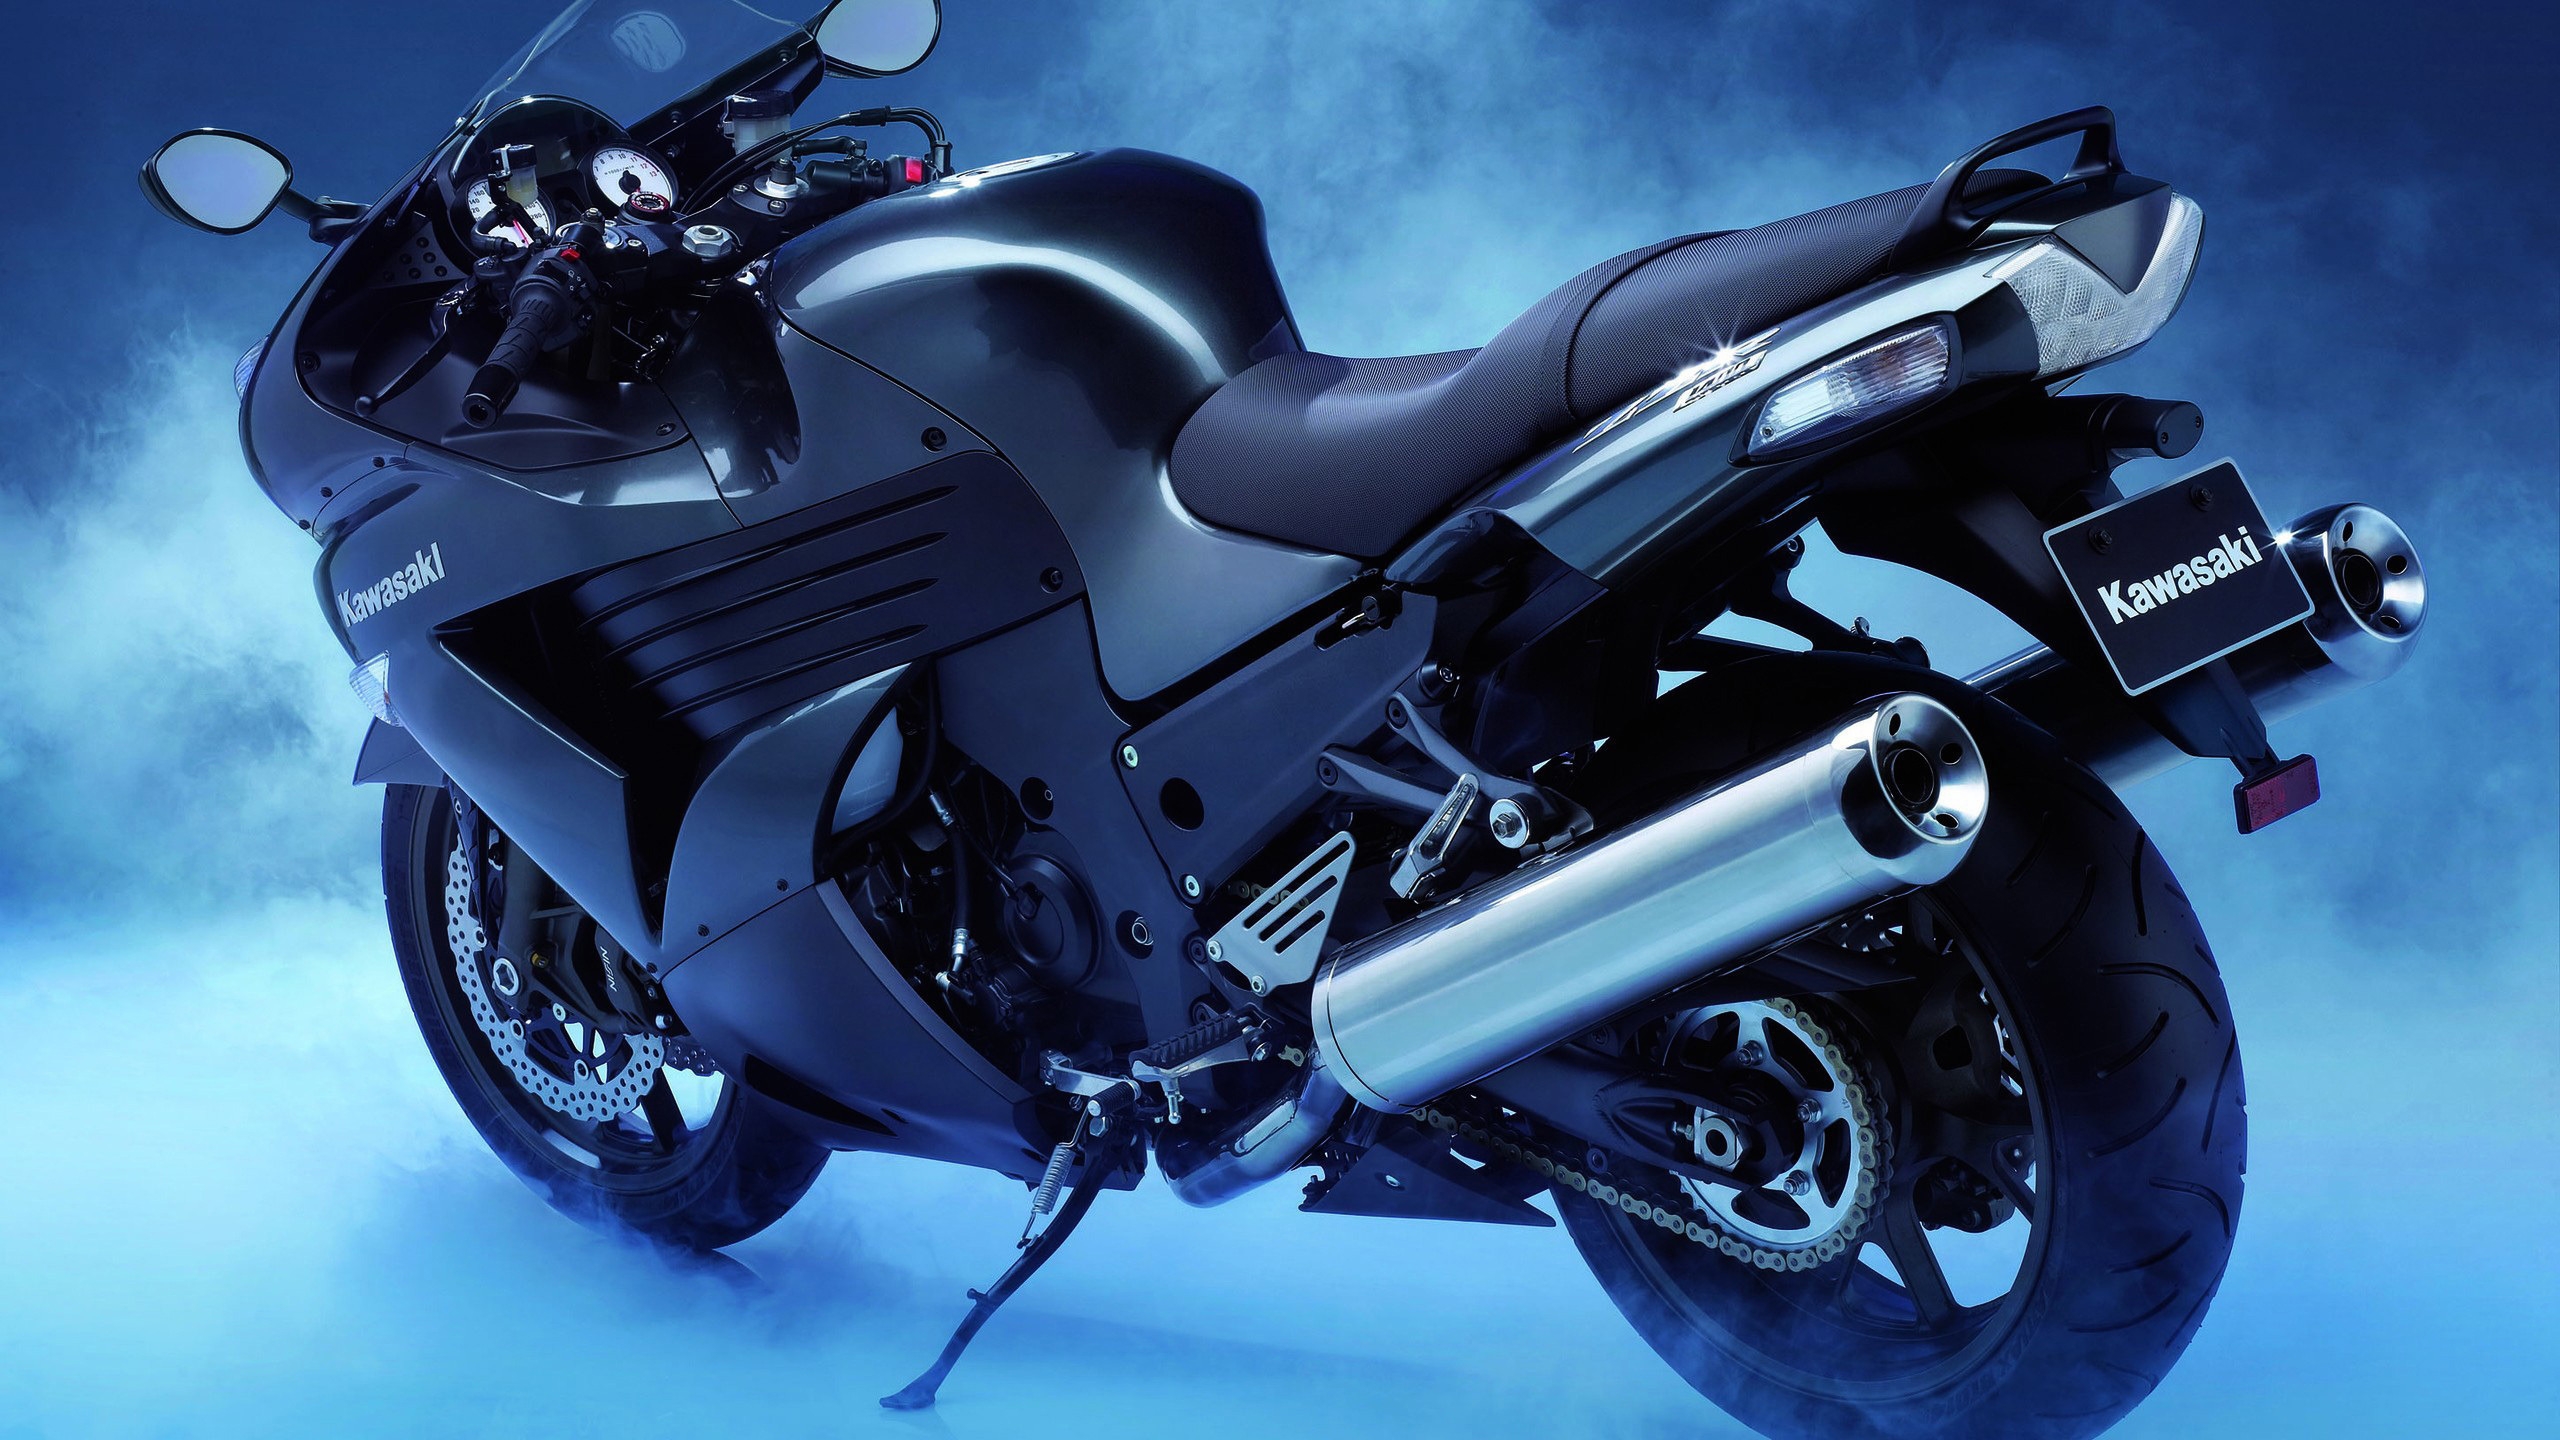 Kawasaki Ninja Black for 2560x1440 HDTV resolution